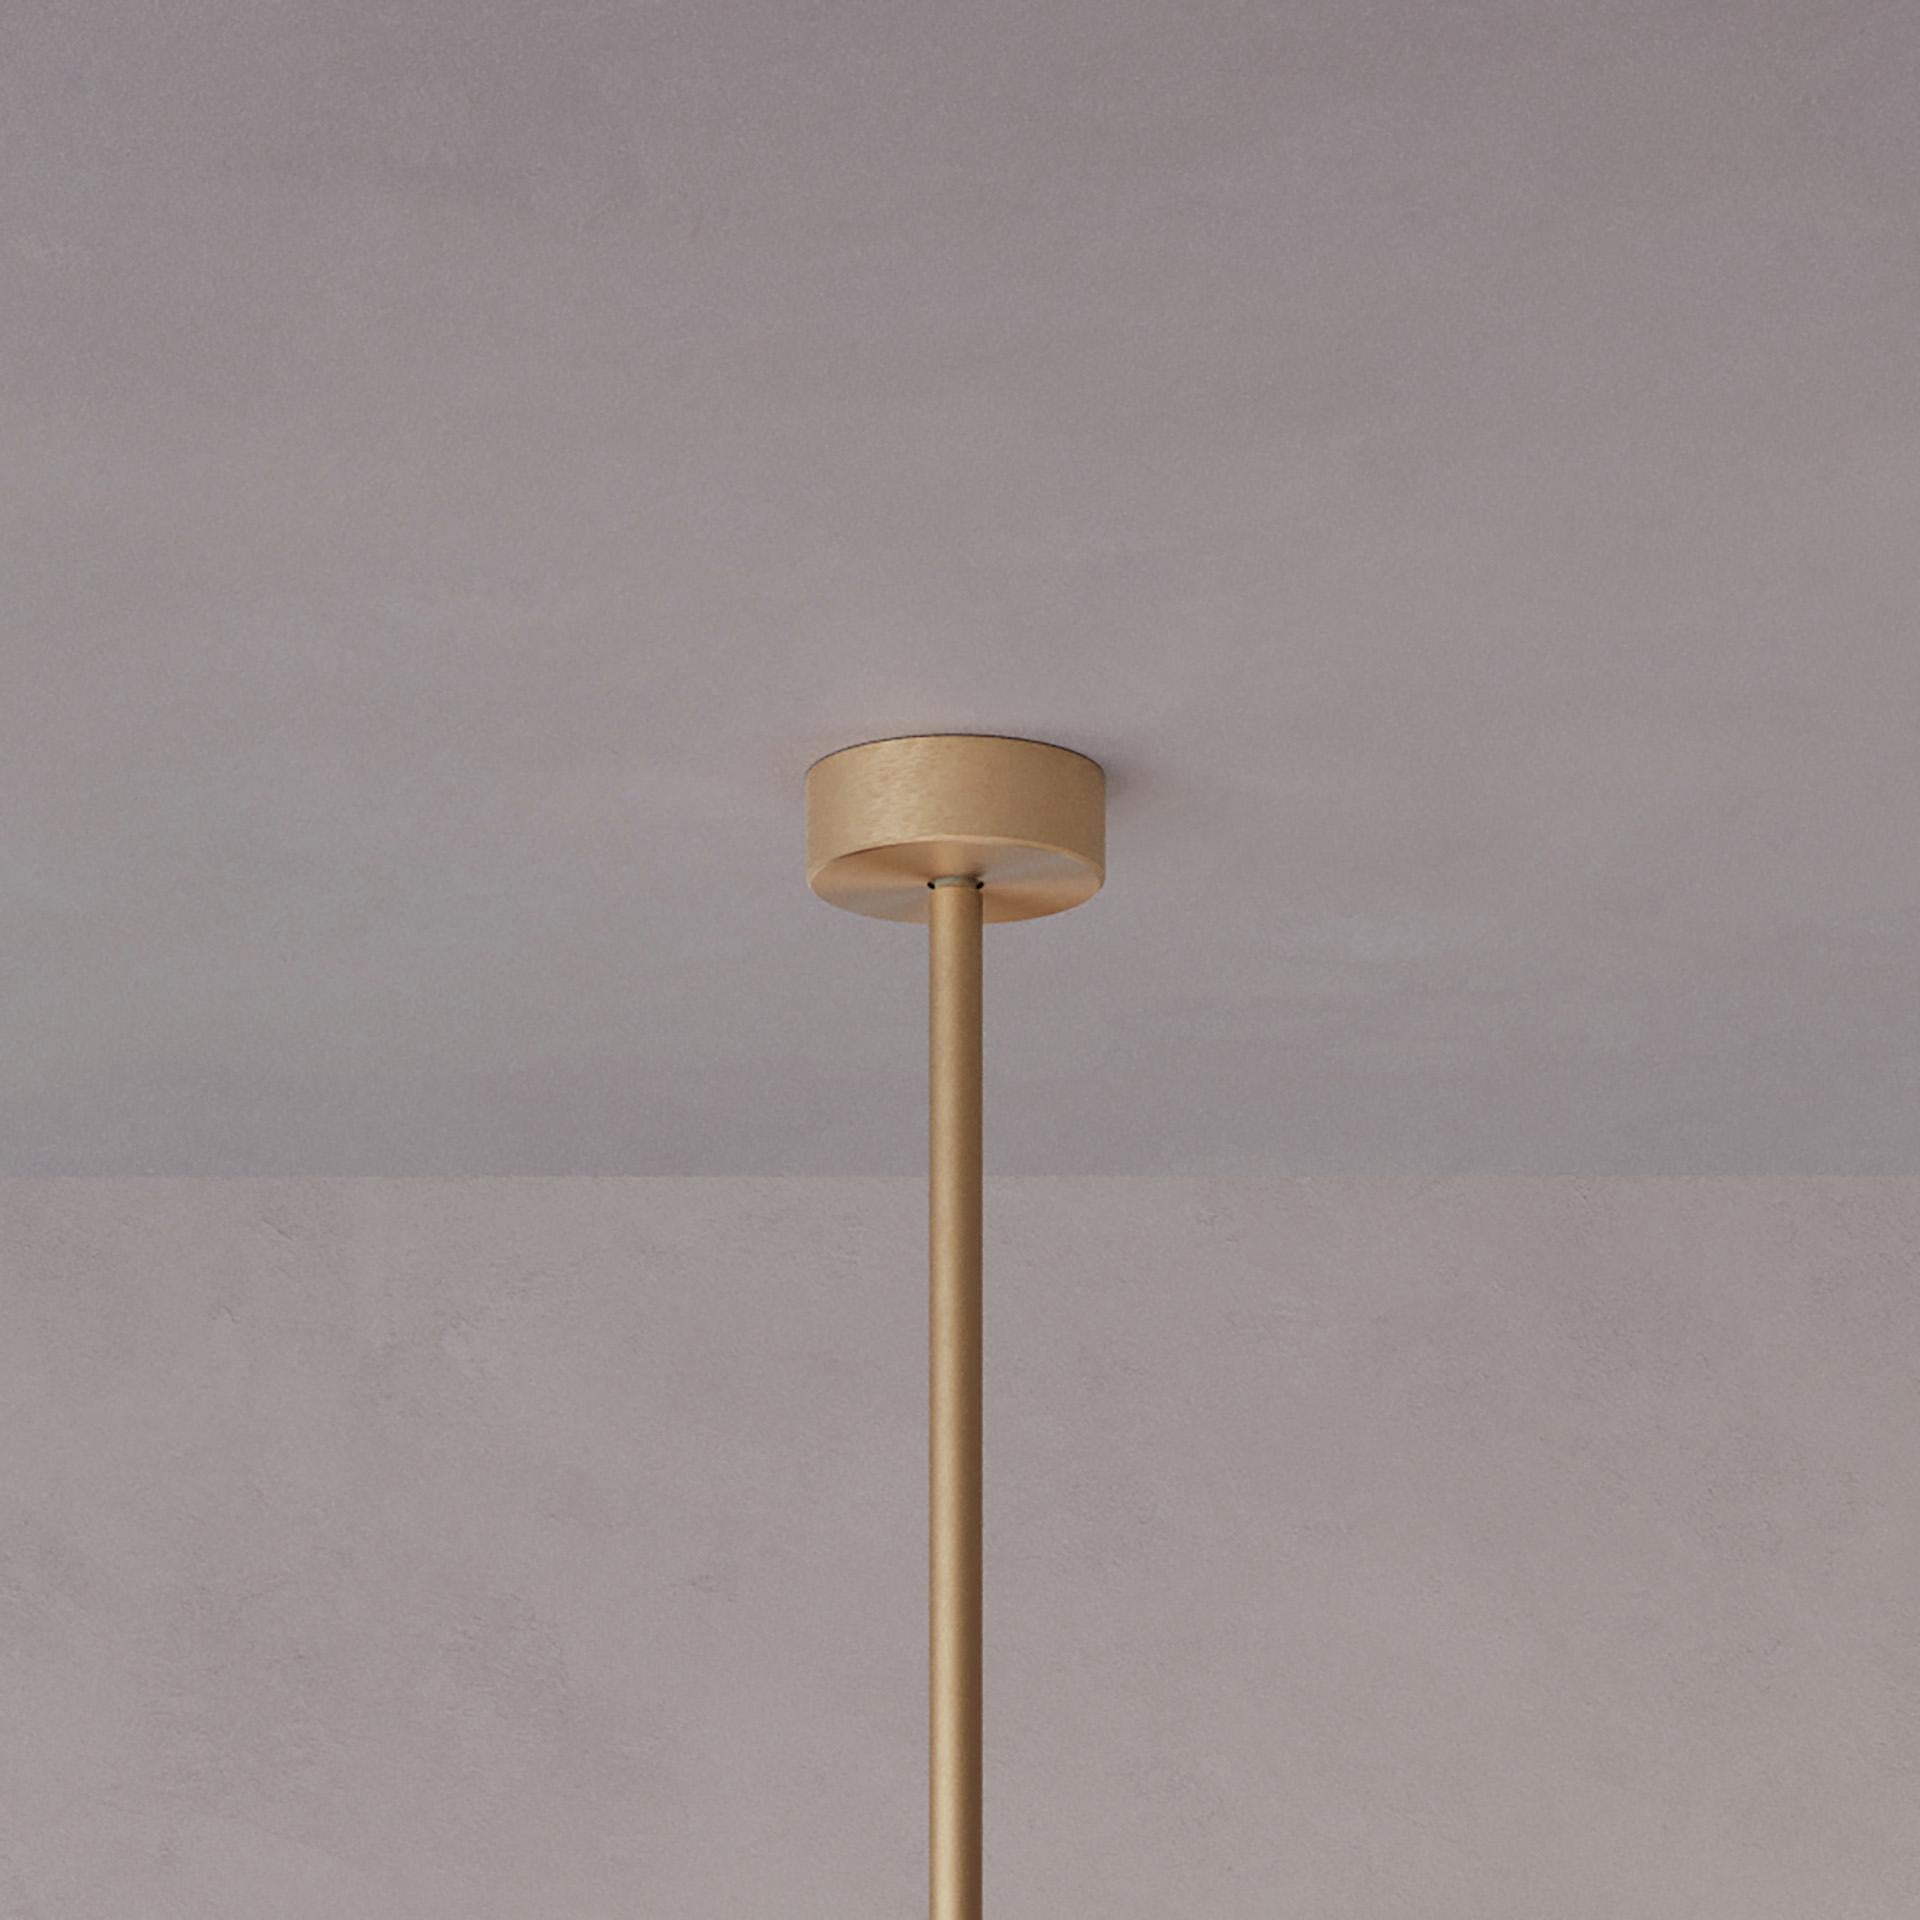 Brass Orbit Trio Purion Ceiling Light by Atelier001